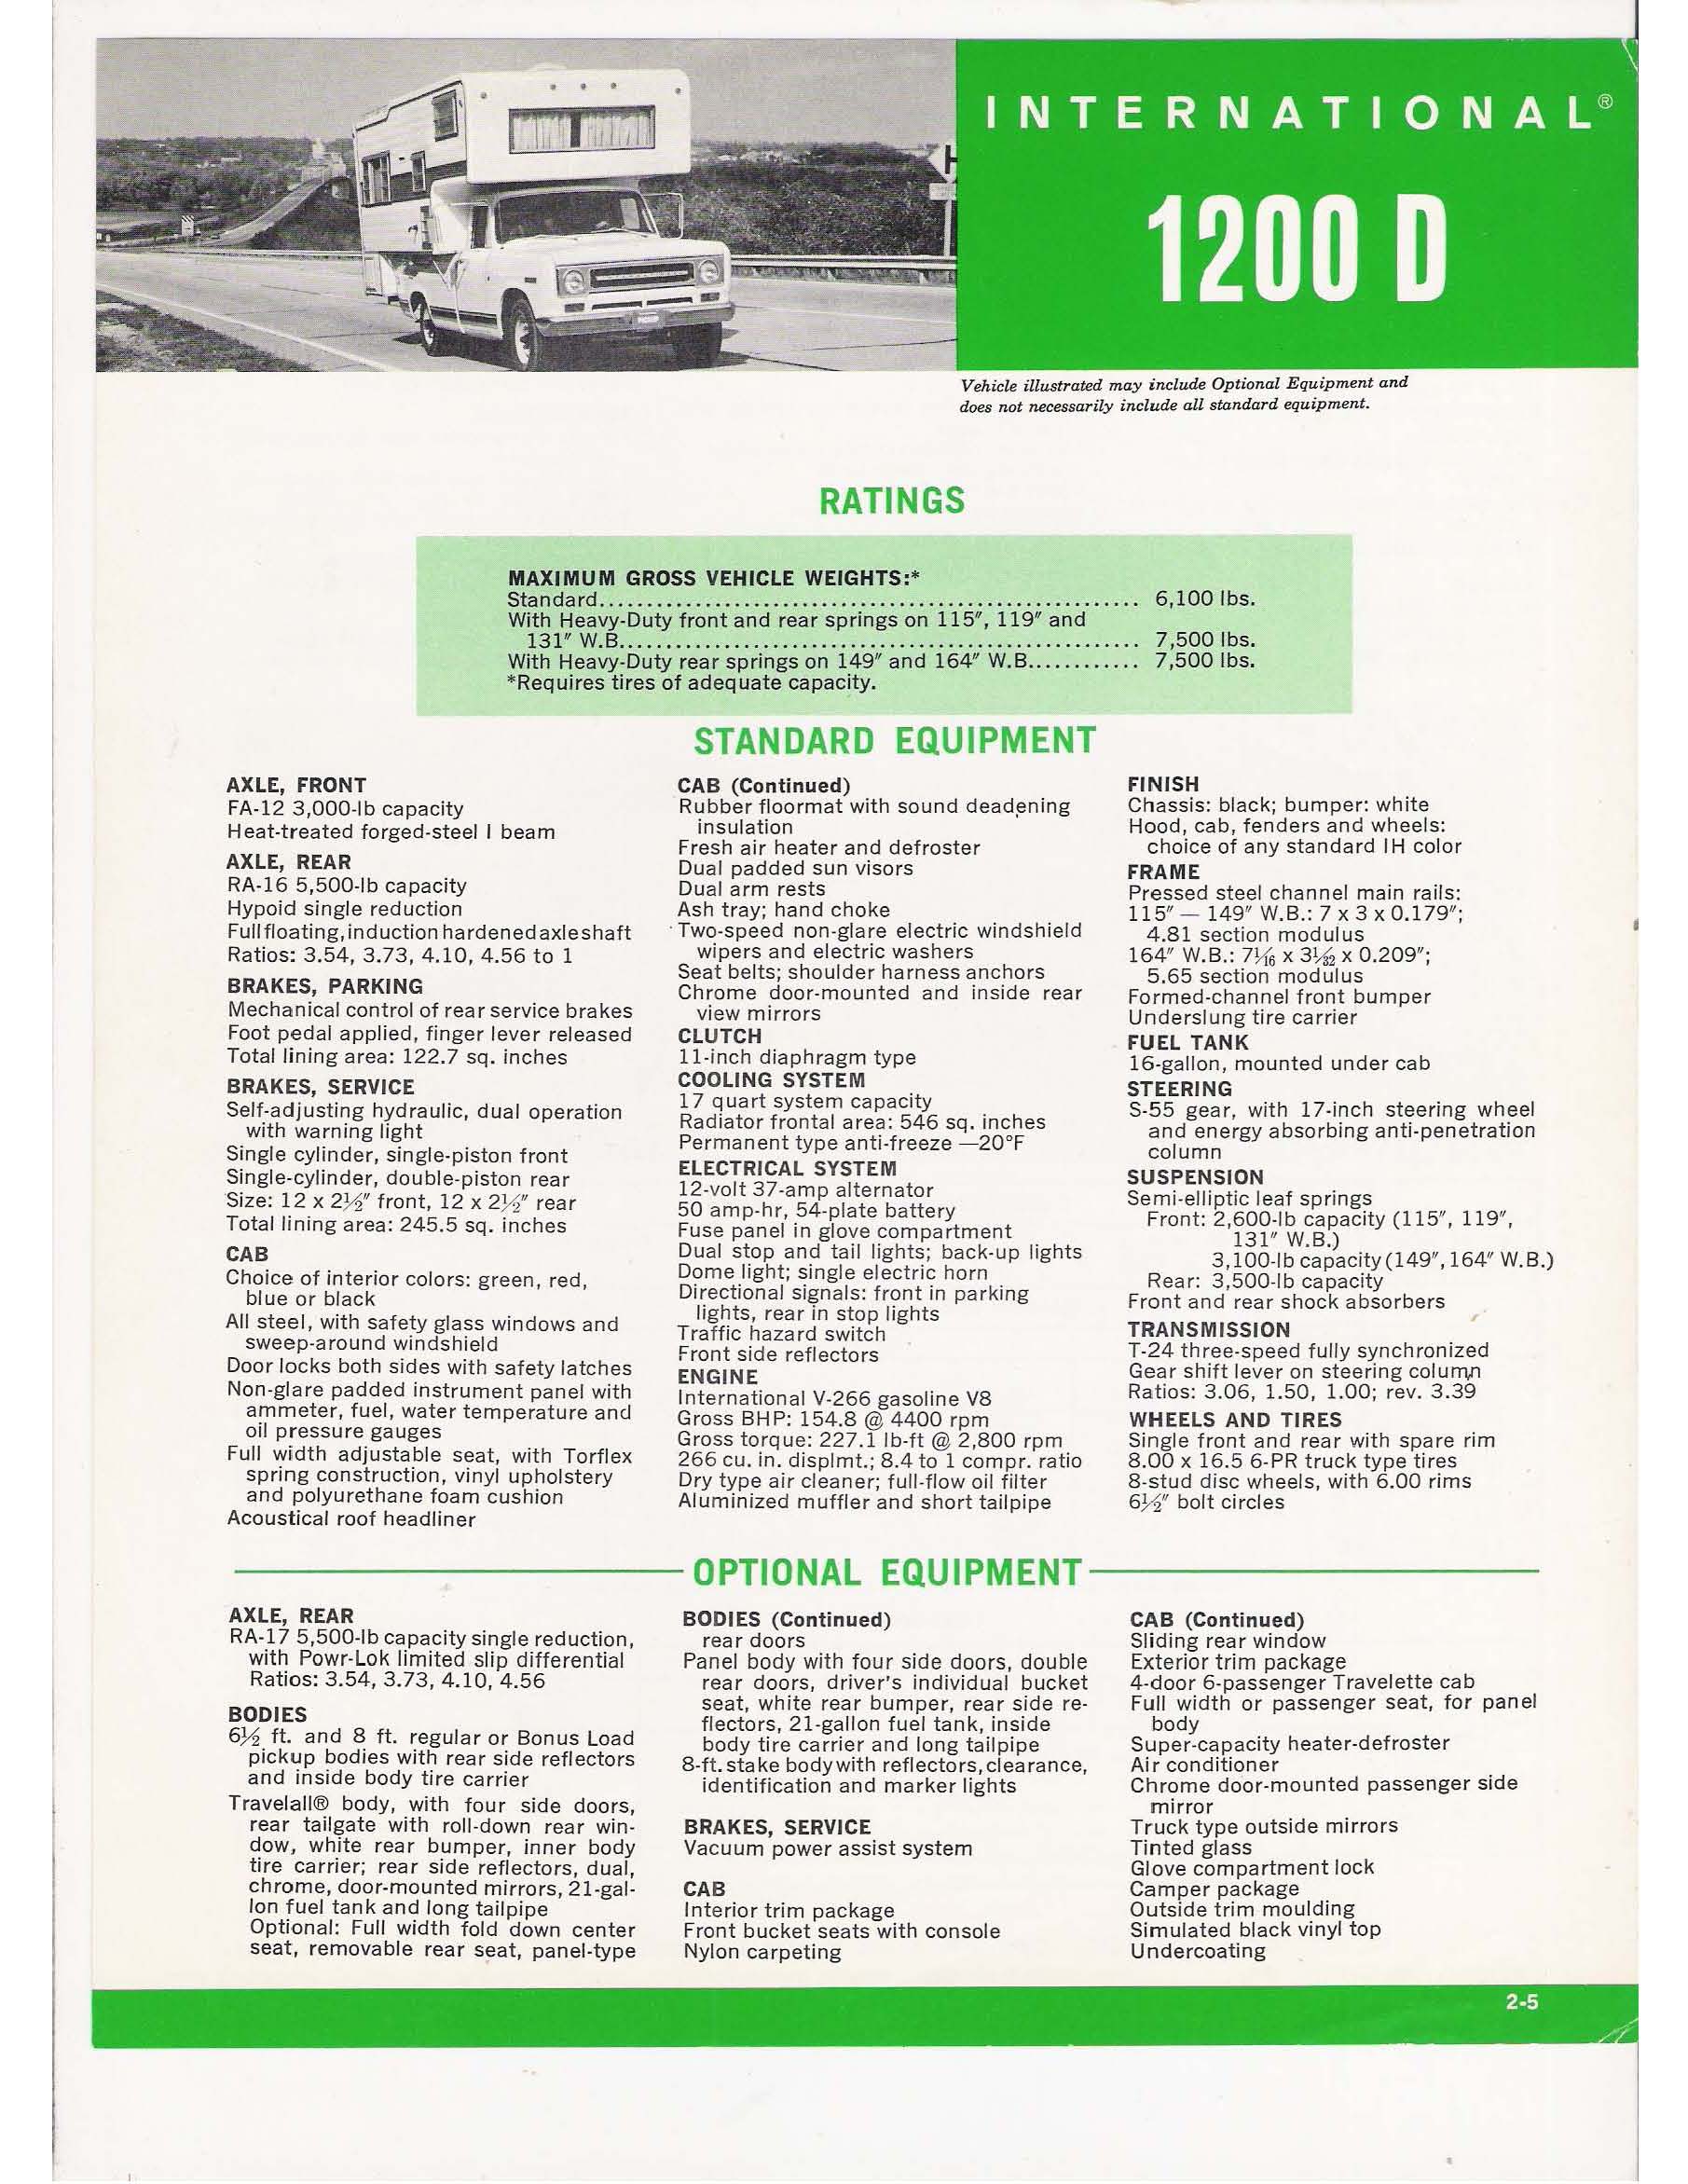 1969 International 1200D Folder Page 1